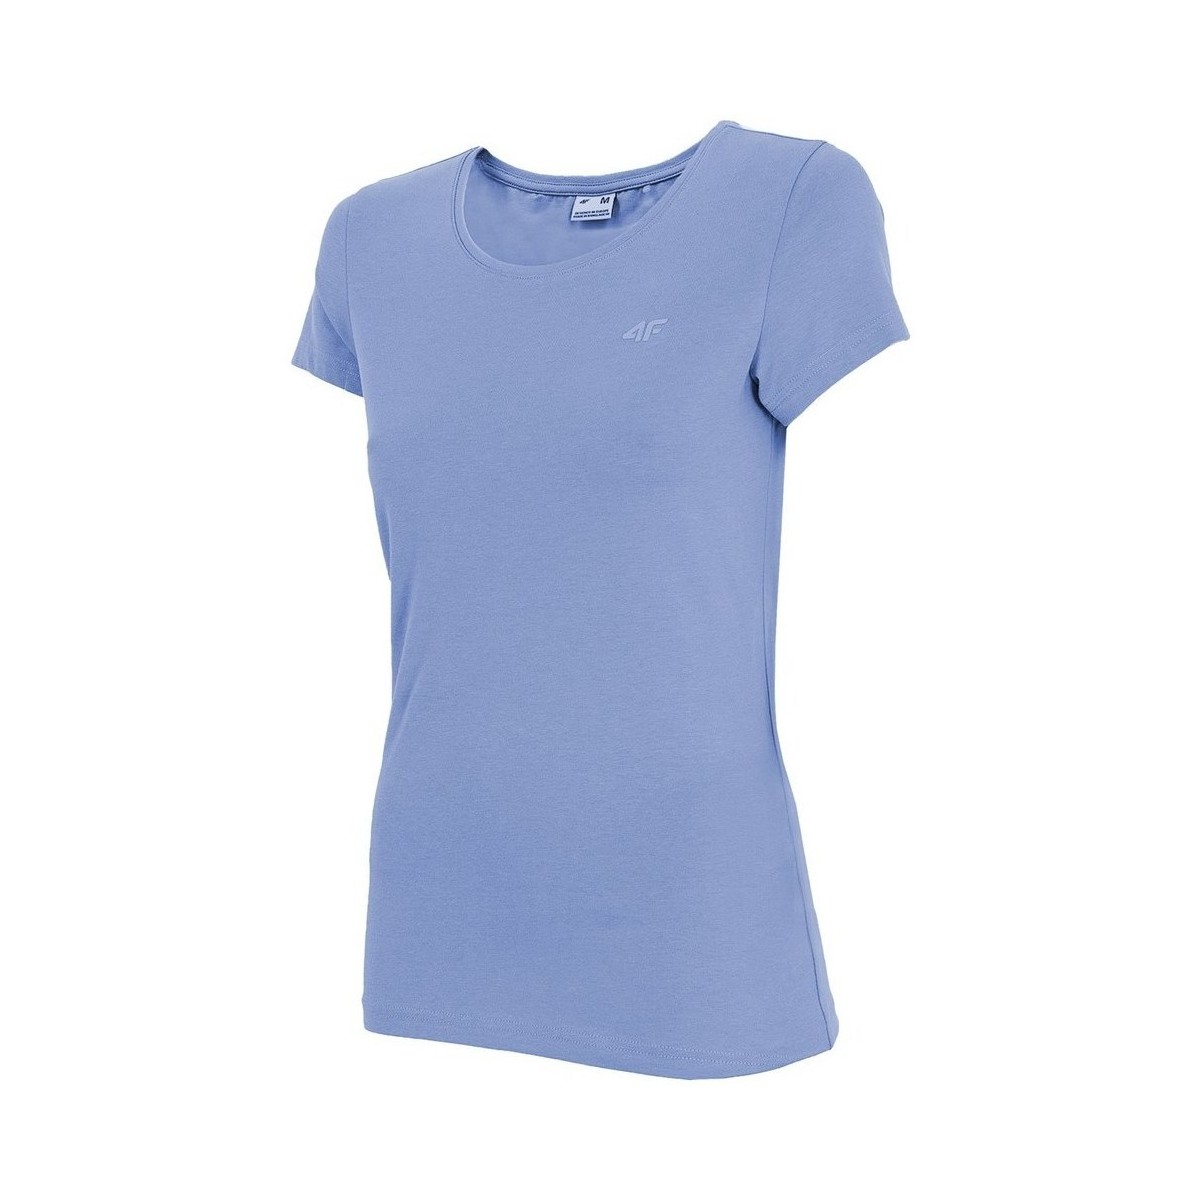 Textil Ženy Trička s krátkým rukávem 4F TSD350 Modrá